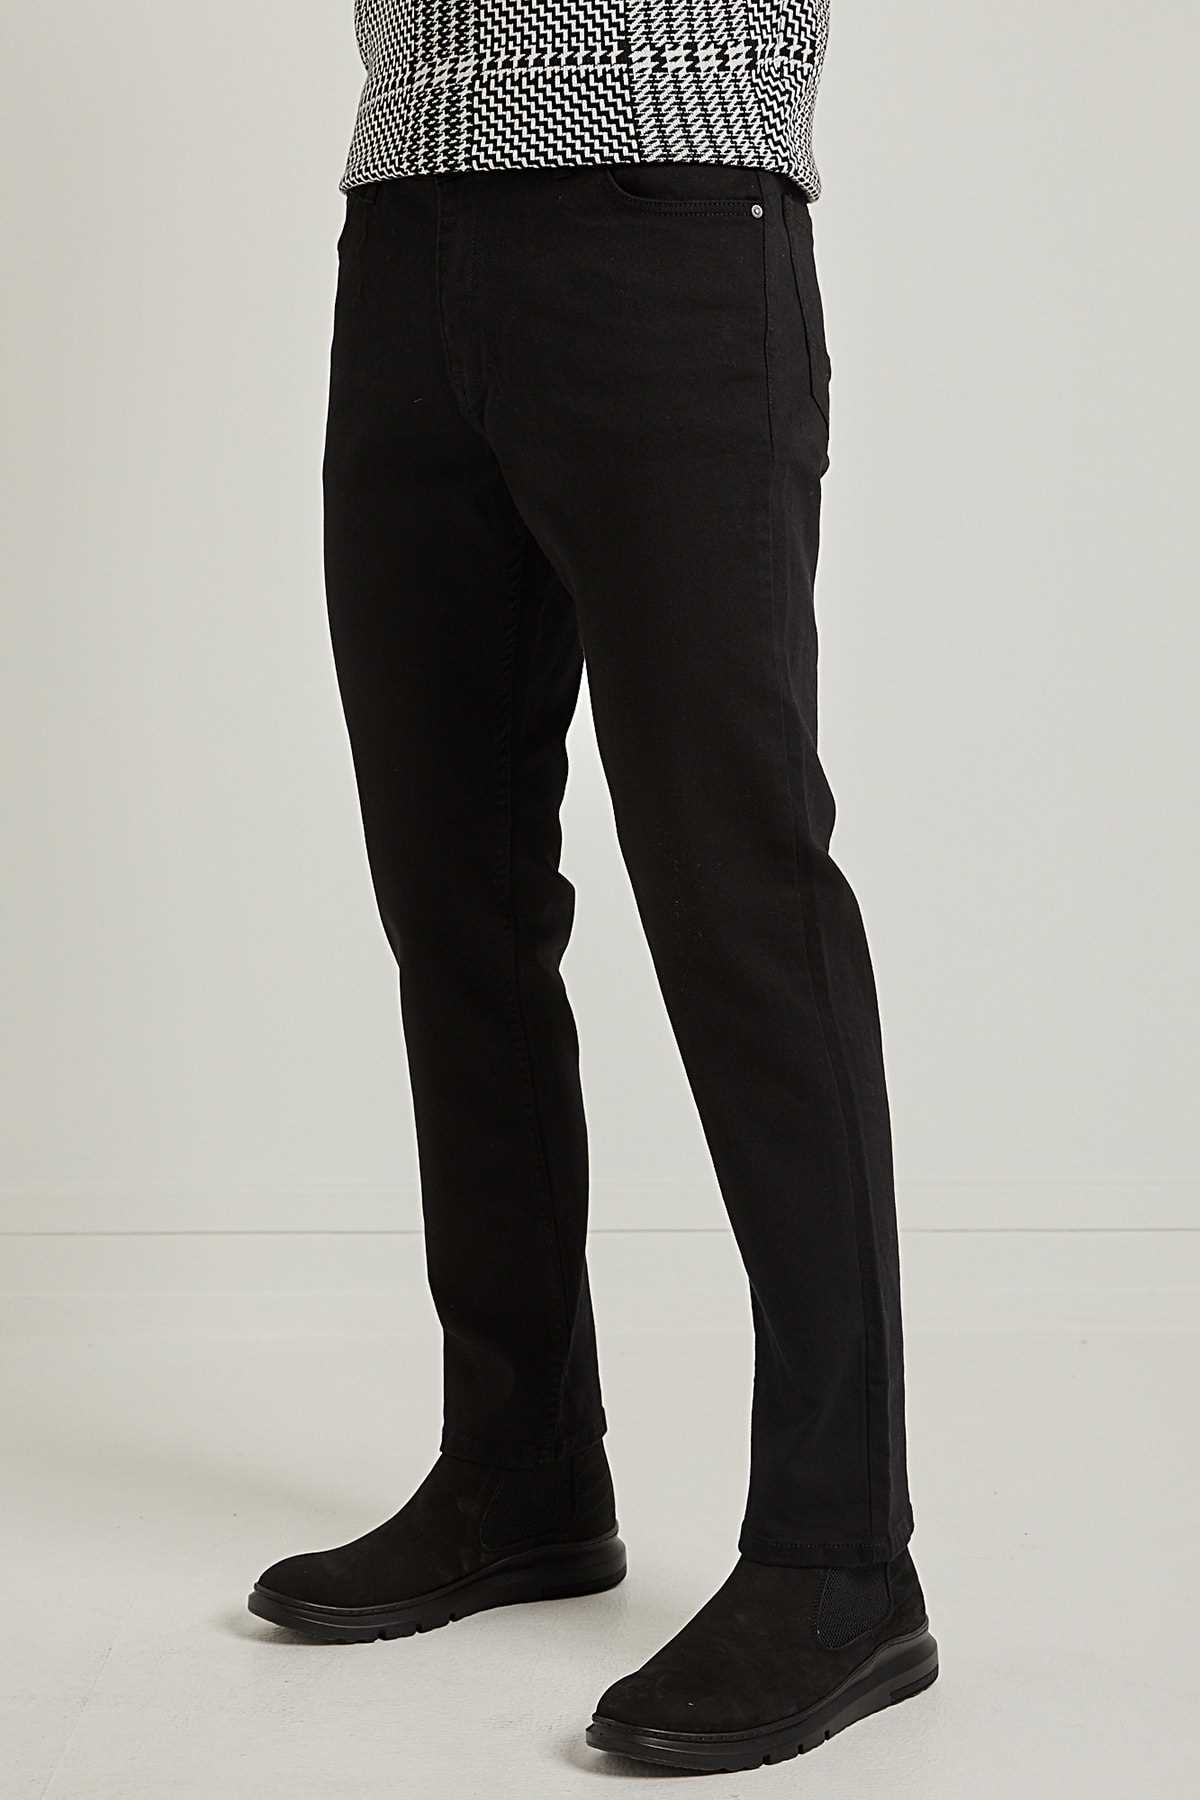 شلوار جین مردانه فروش برند PAULMARK رنگ مشکی کد ty54580826